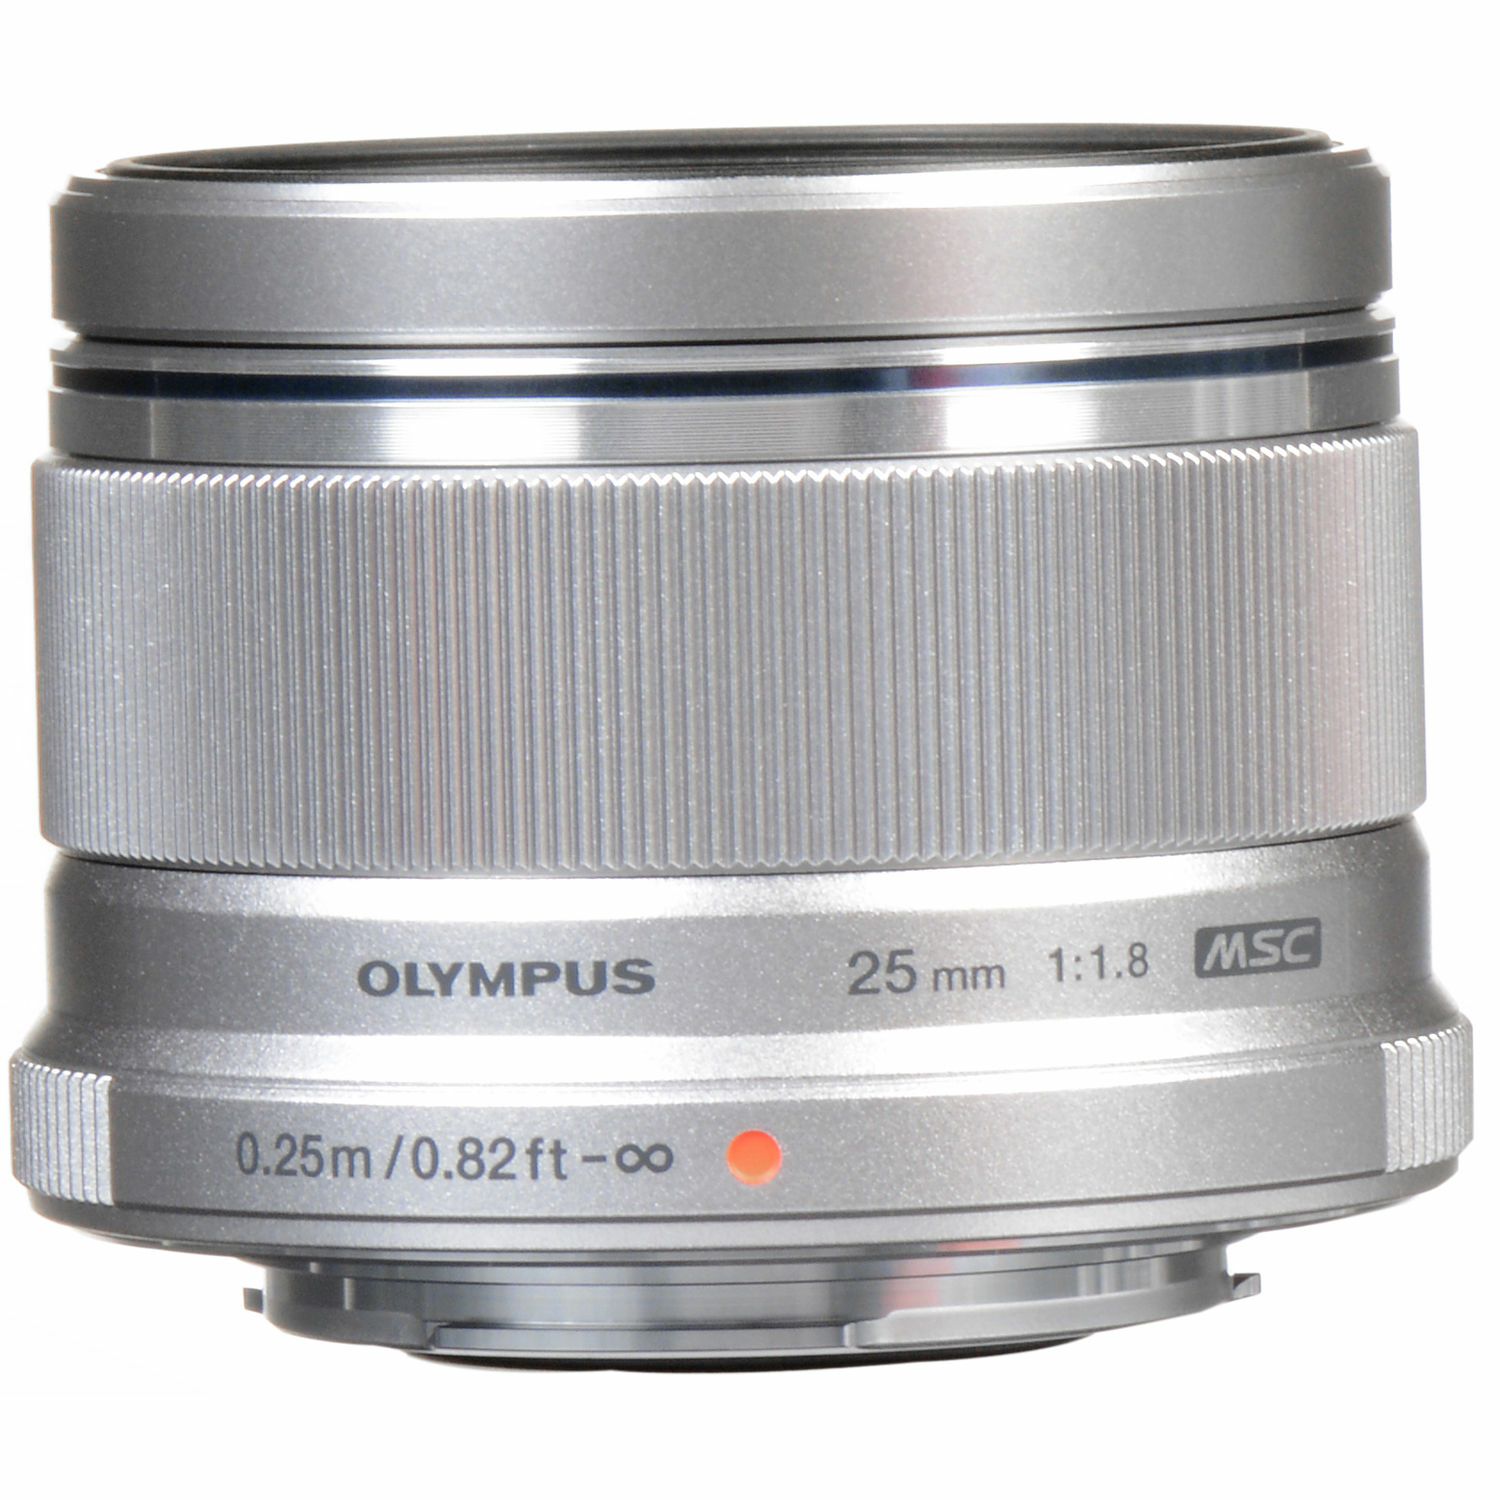 Olympus M. Zuiko Digital 25mm f/1.8 Silver Premium objektiv fiksne žarišne duljine ES-M2518 25 1:1.8 f1.8 prime lens Micro Four Thirds MFT micro4/3" (V311060SW000)